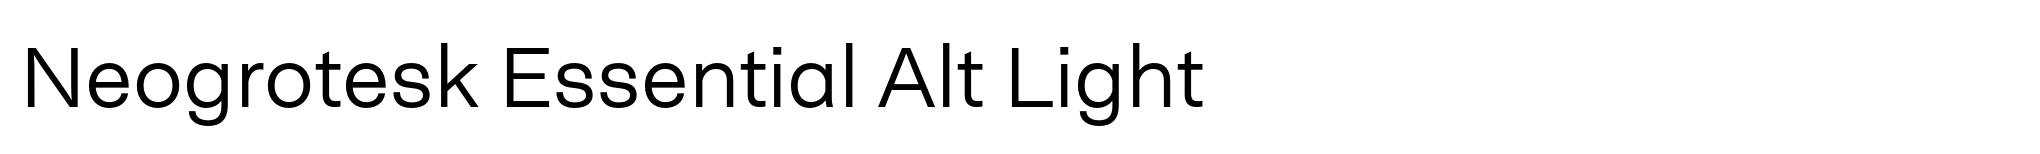 Neogrotesk Essential Alt Light image